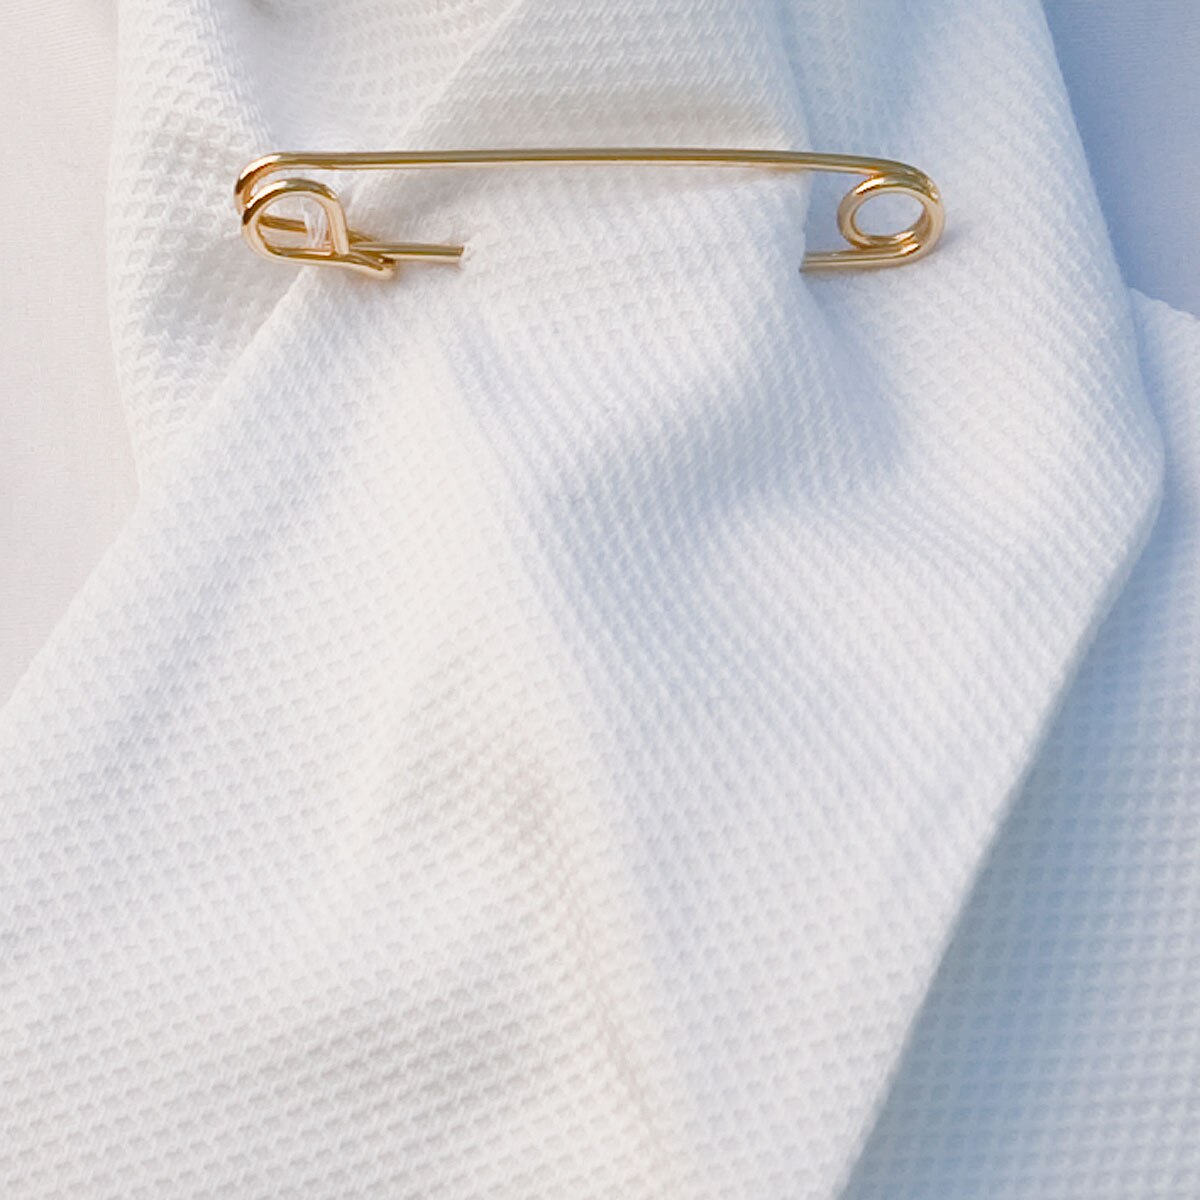 Dressage stock tie pin